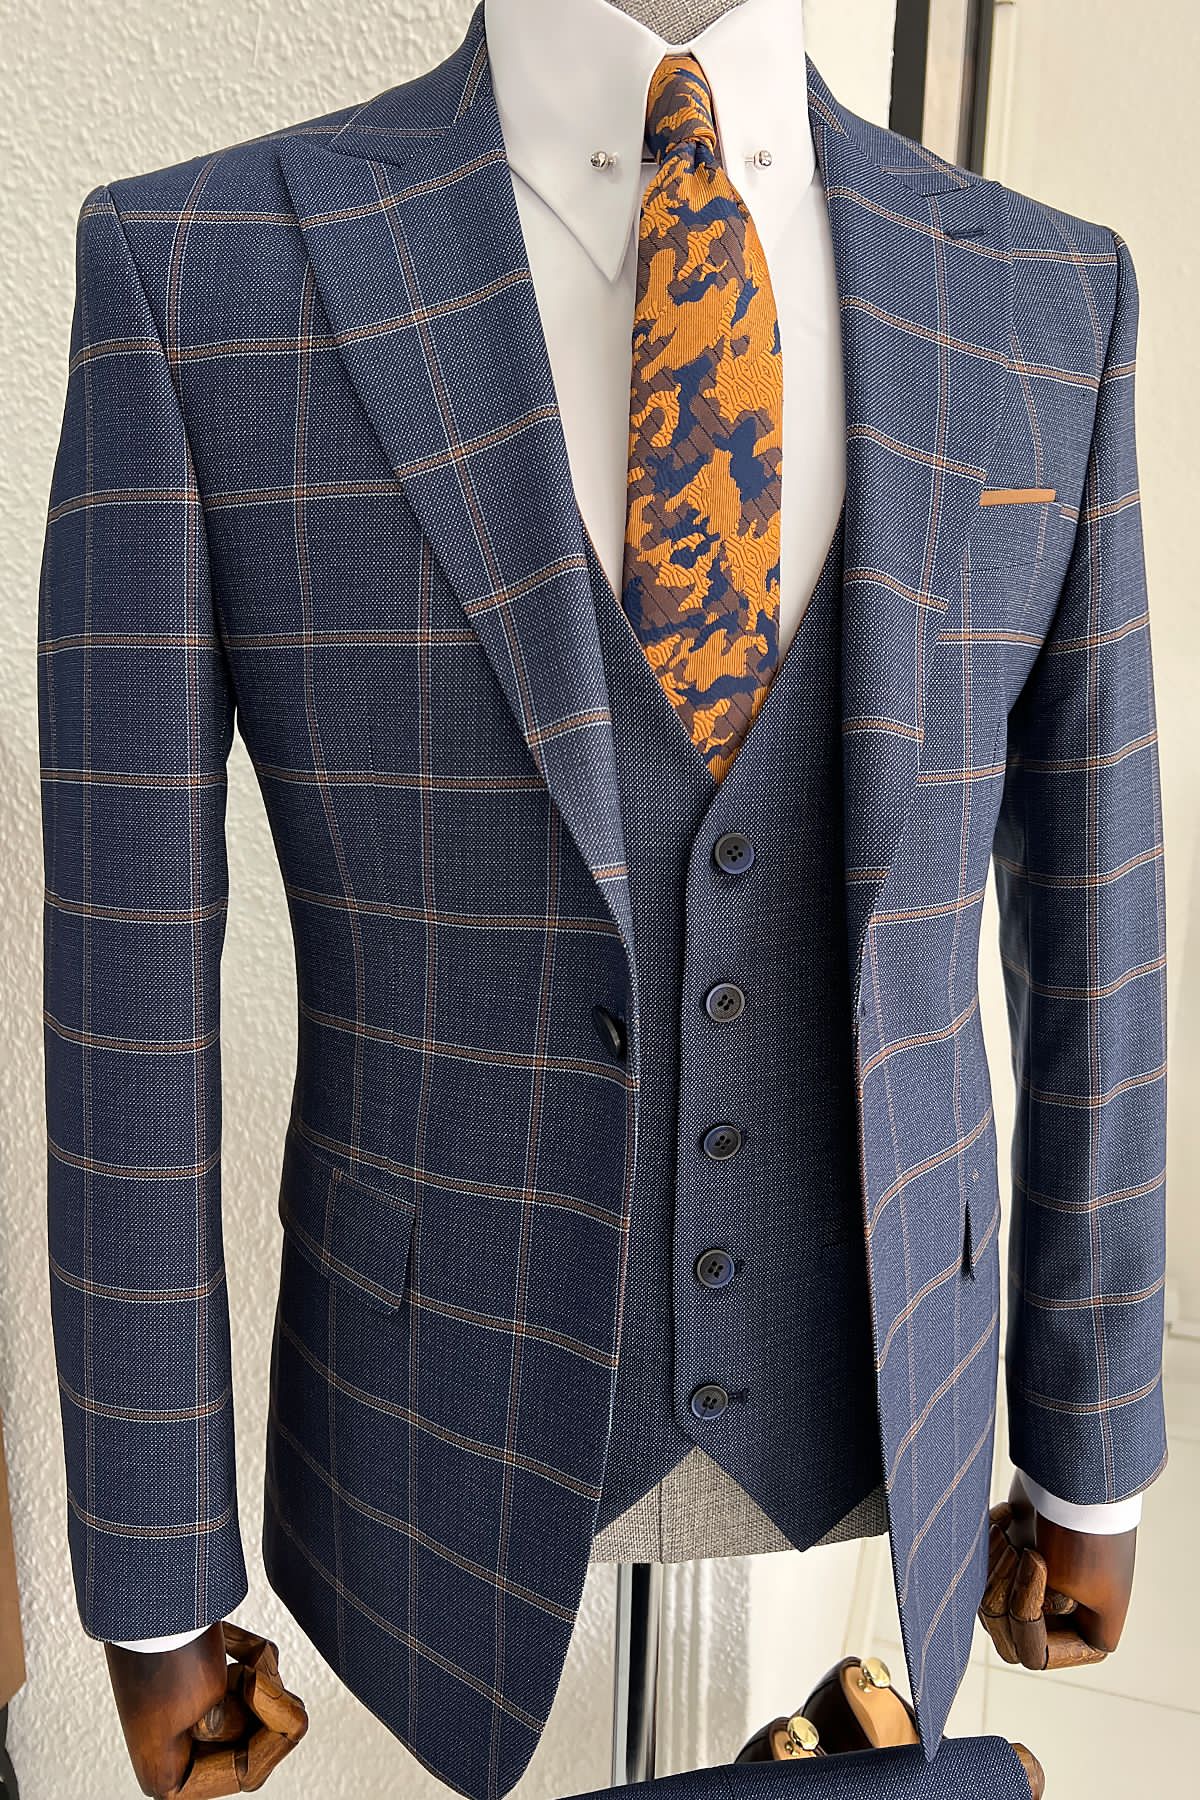 Daniel Patterned Navy-Blue Wool Suit